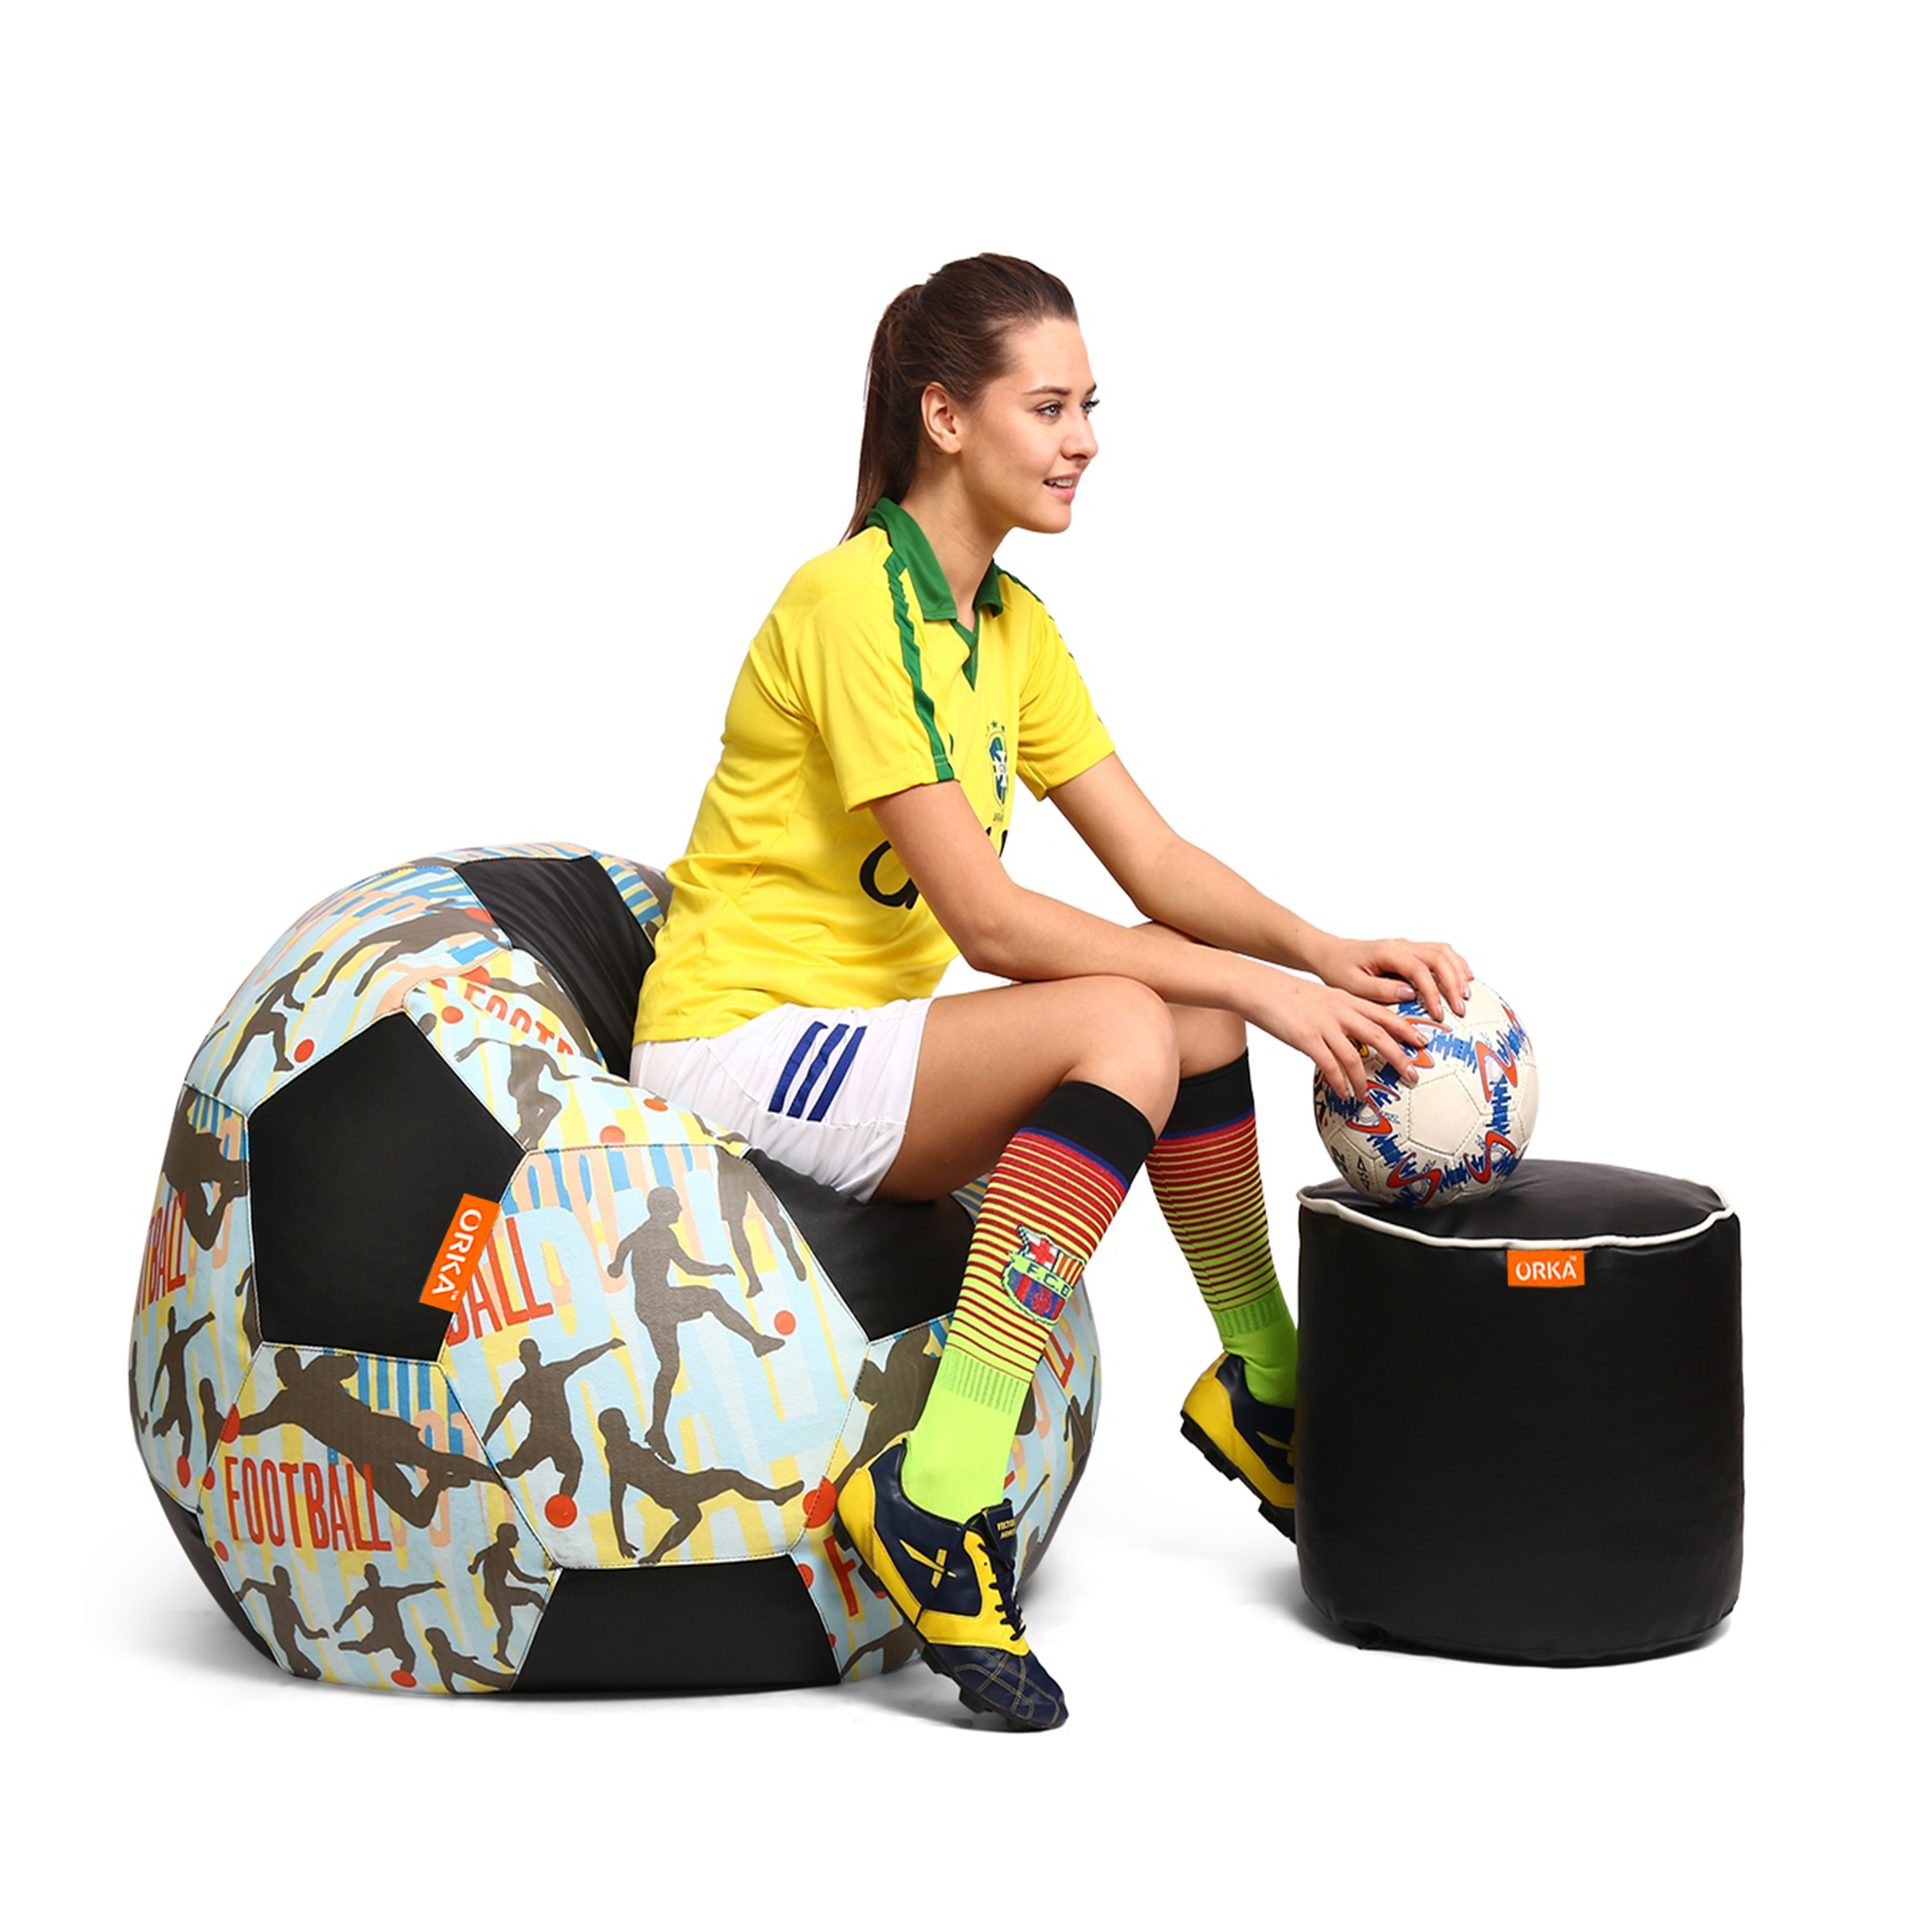 ORKA Digital Printed Sports Bean Bag Kicking Football Theme    